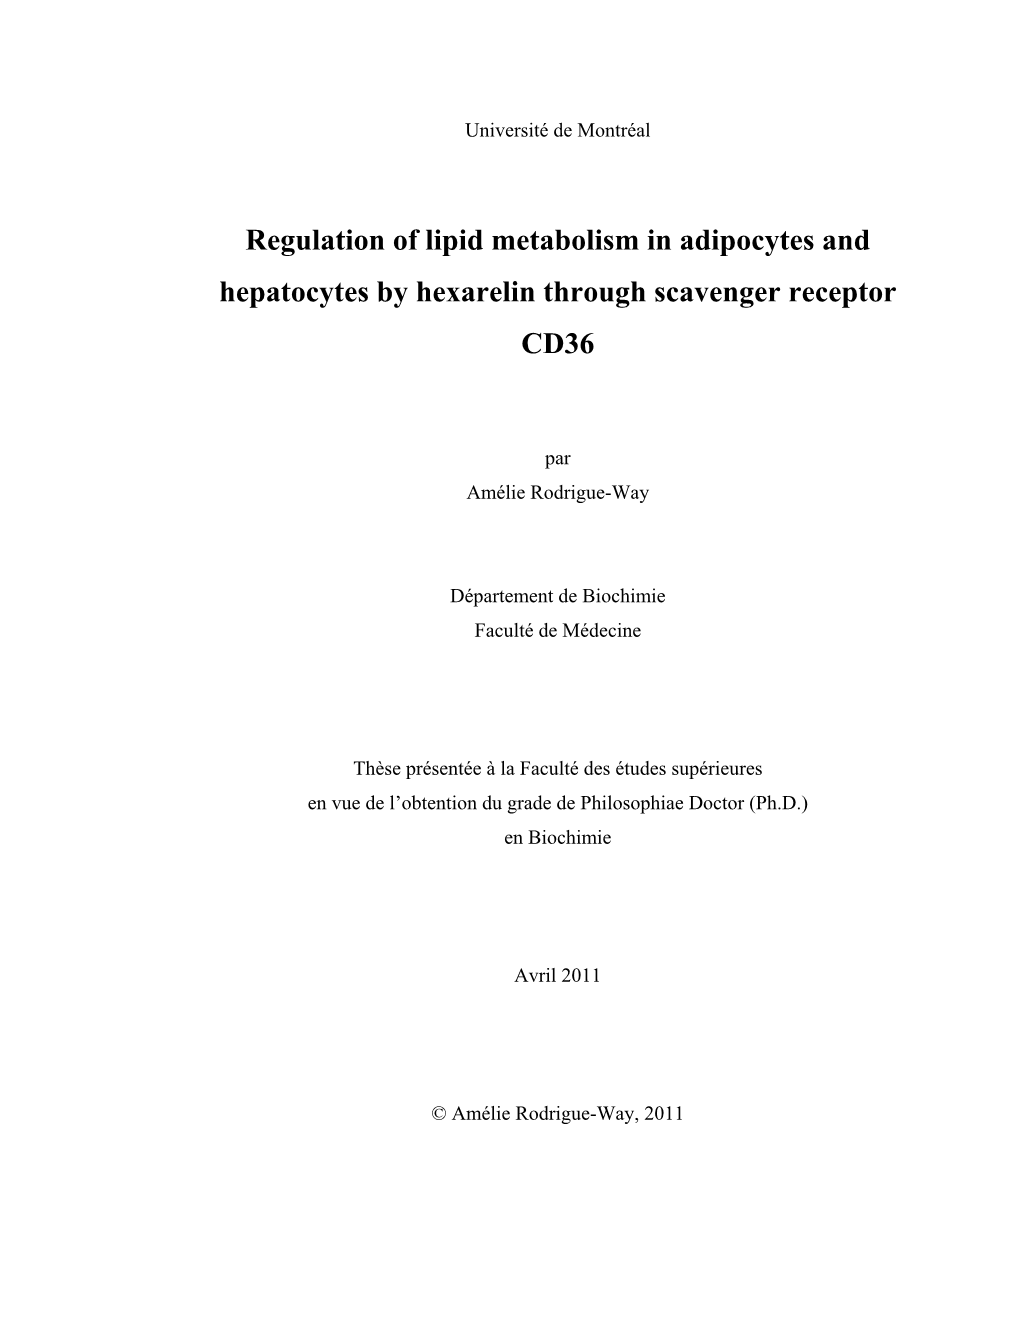 Regulation of Lipid Metabolism in Adipocytes and Hepatocytes by Hexarelin Through Scavenger Receptor CD36